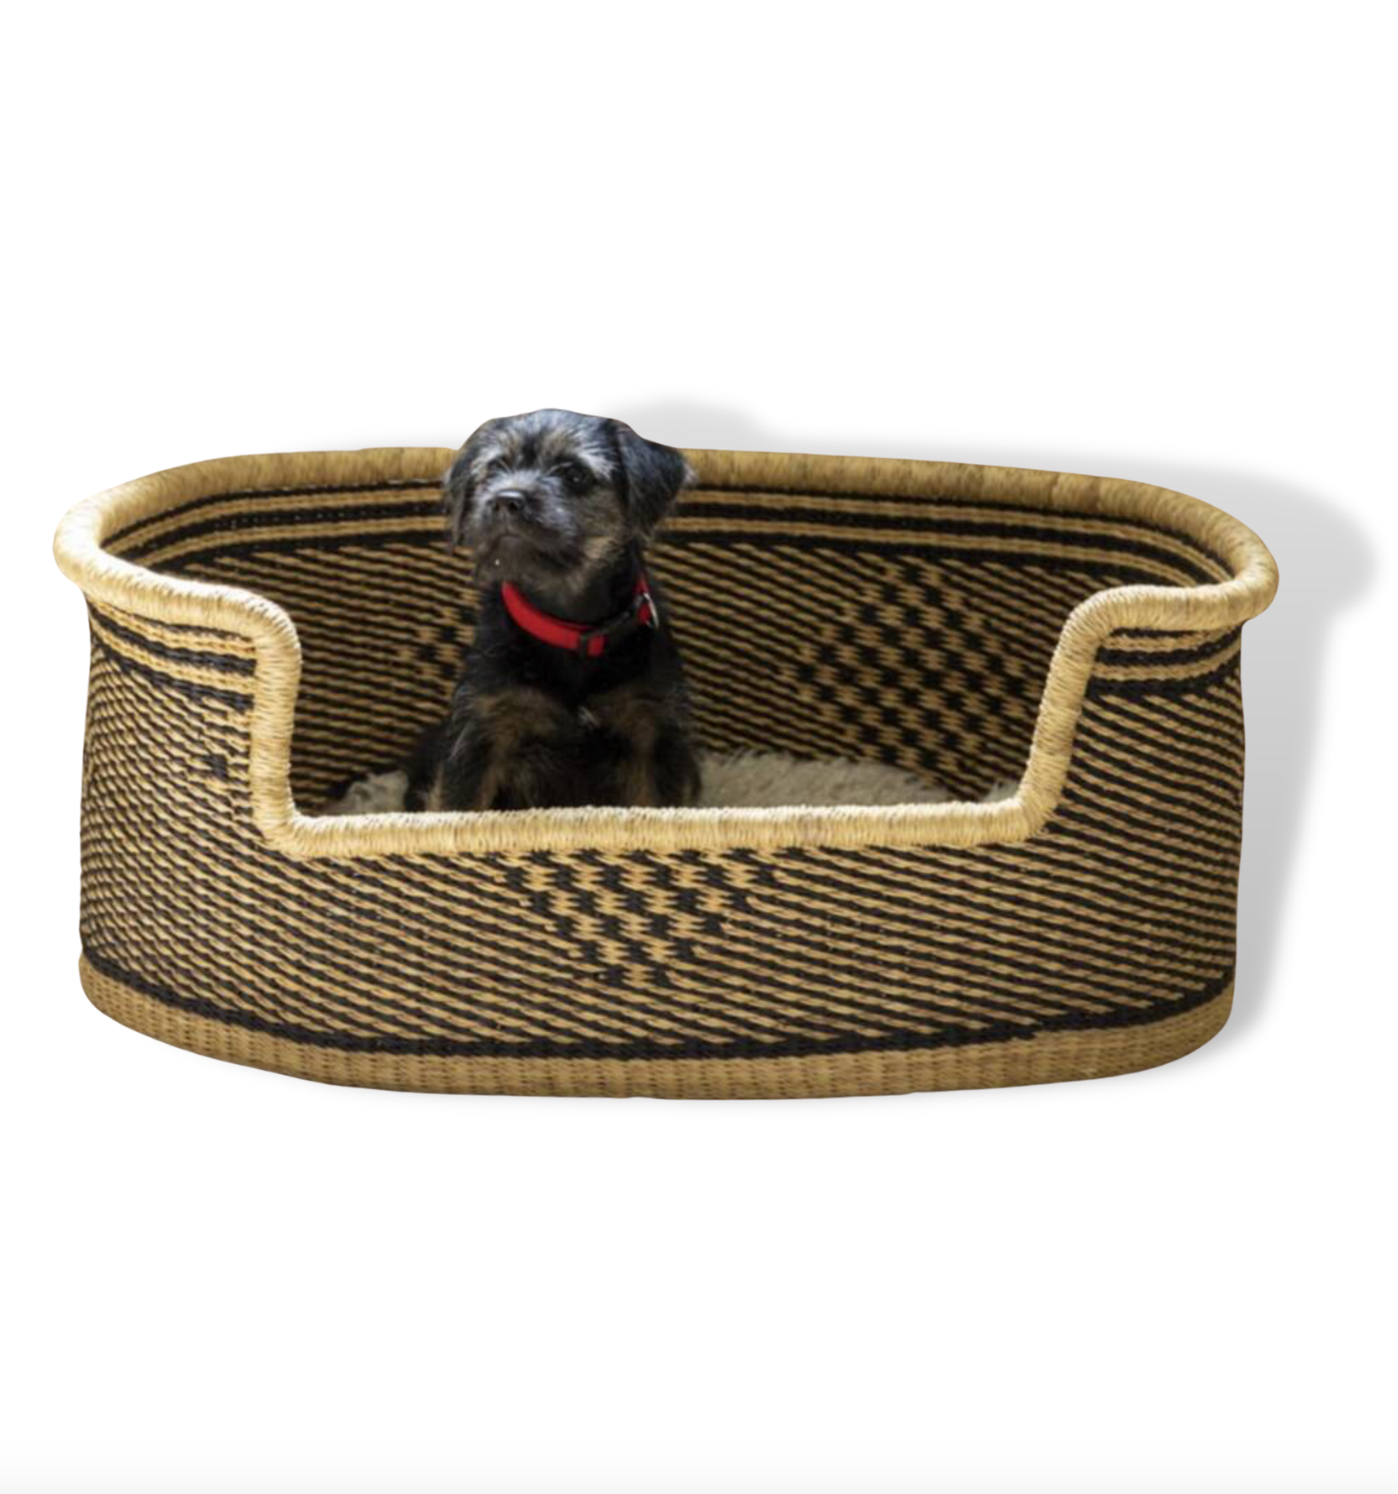 Grand Illusions Fido's Hand Made Dog Basket